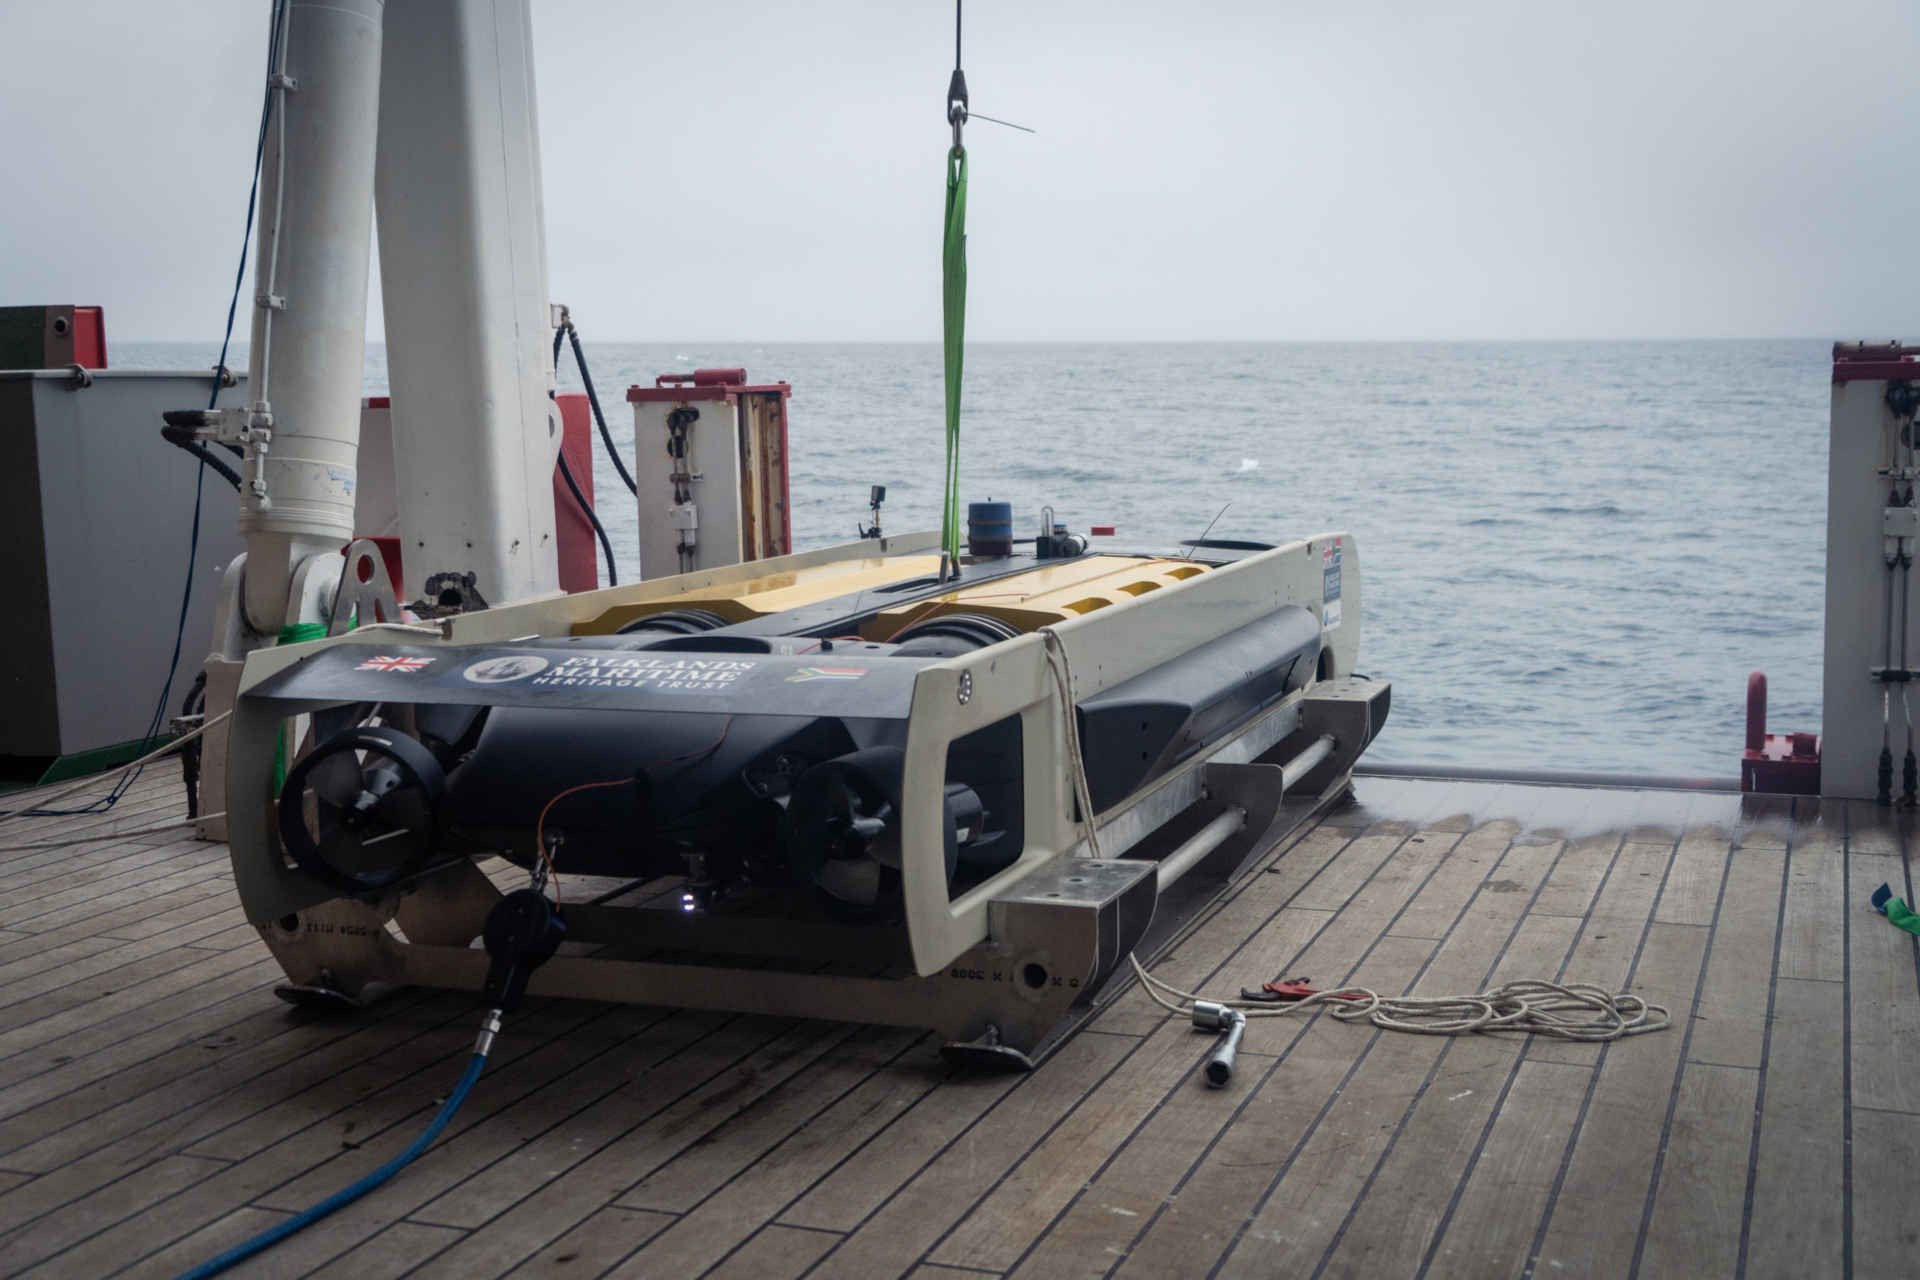 The 'Sabertooth' submersible robot